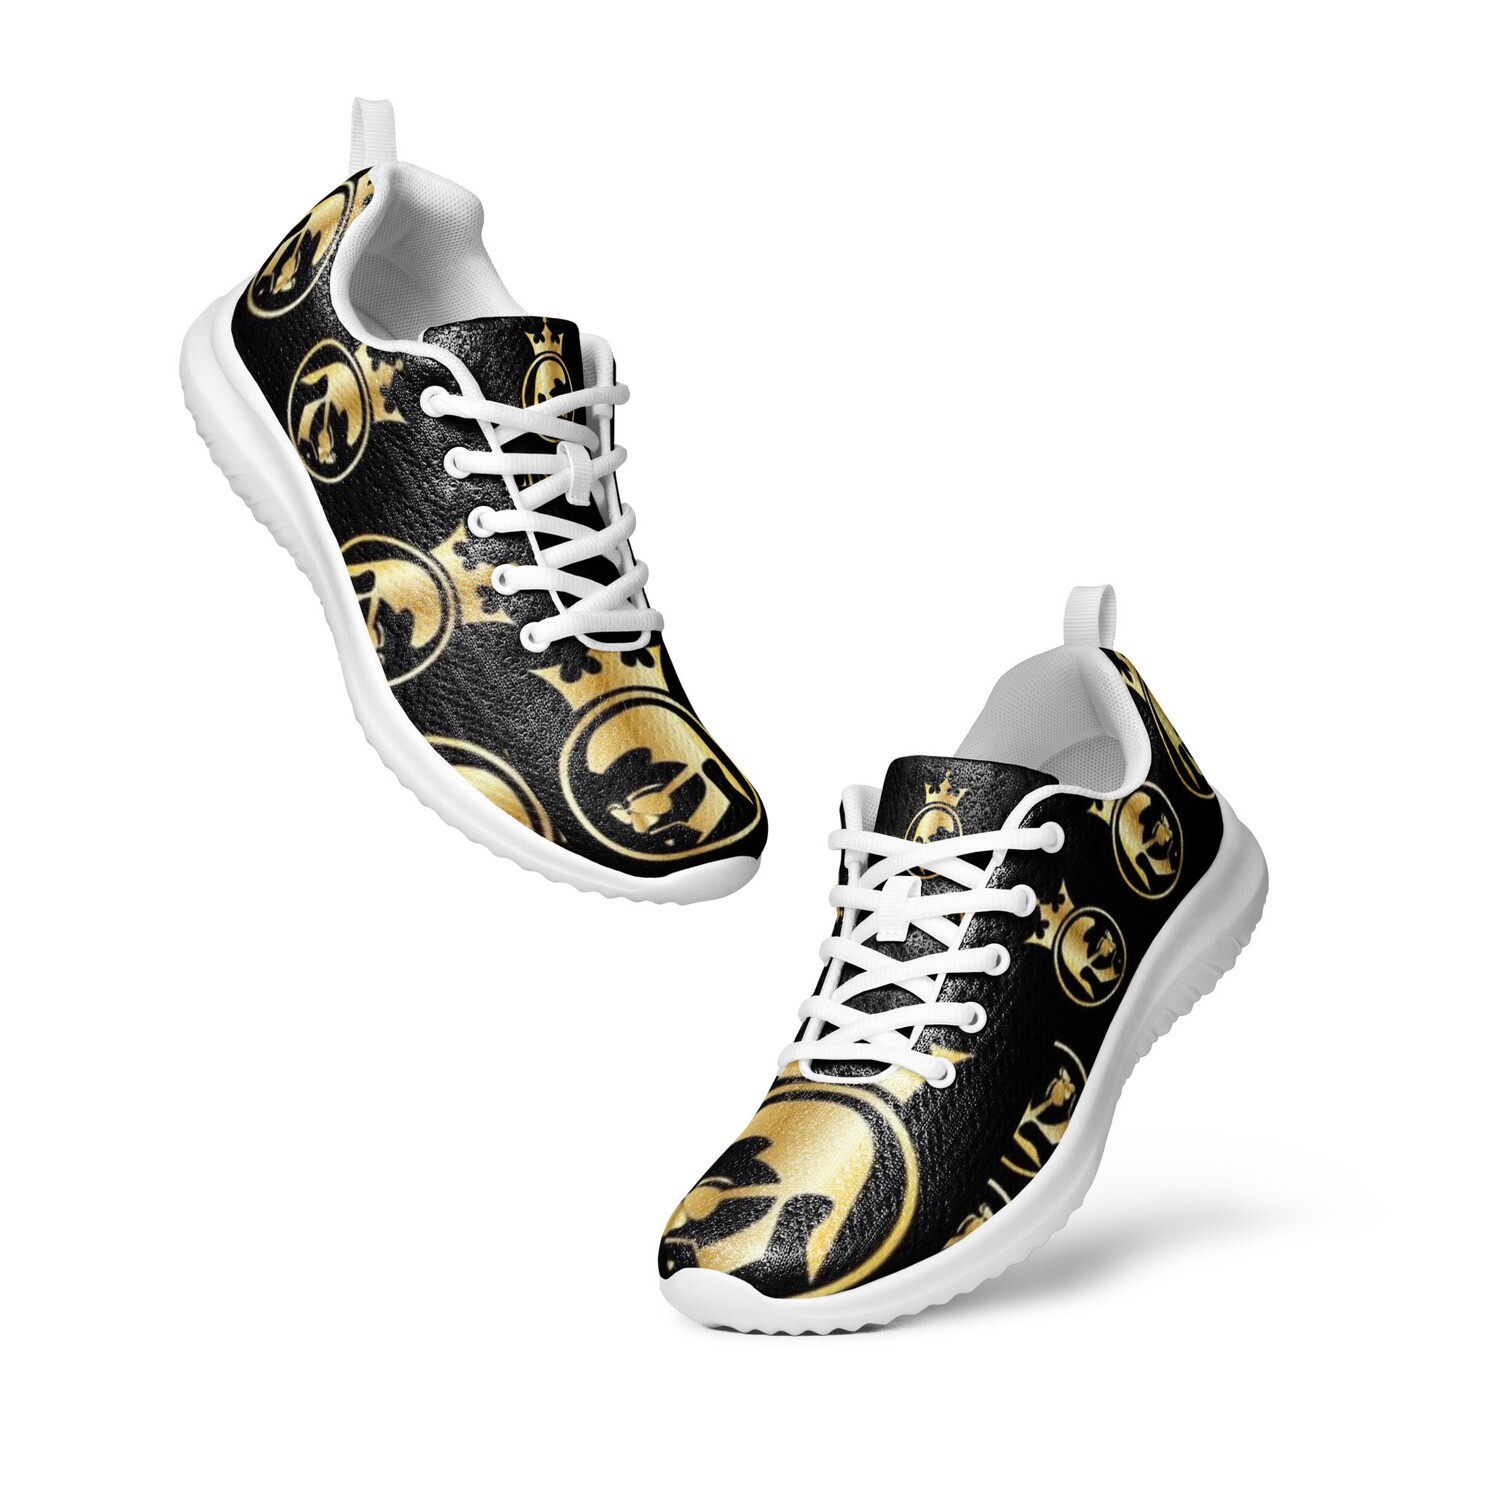 Jdlino brand men Gold & Black athletic shoes